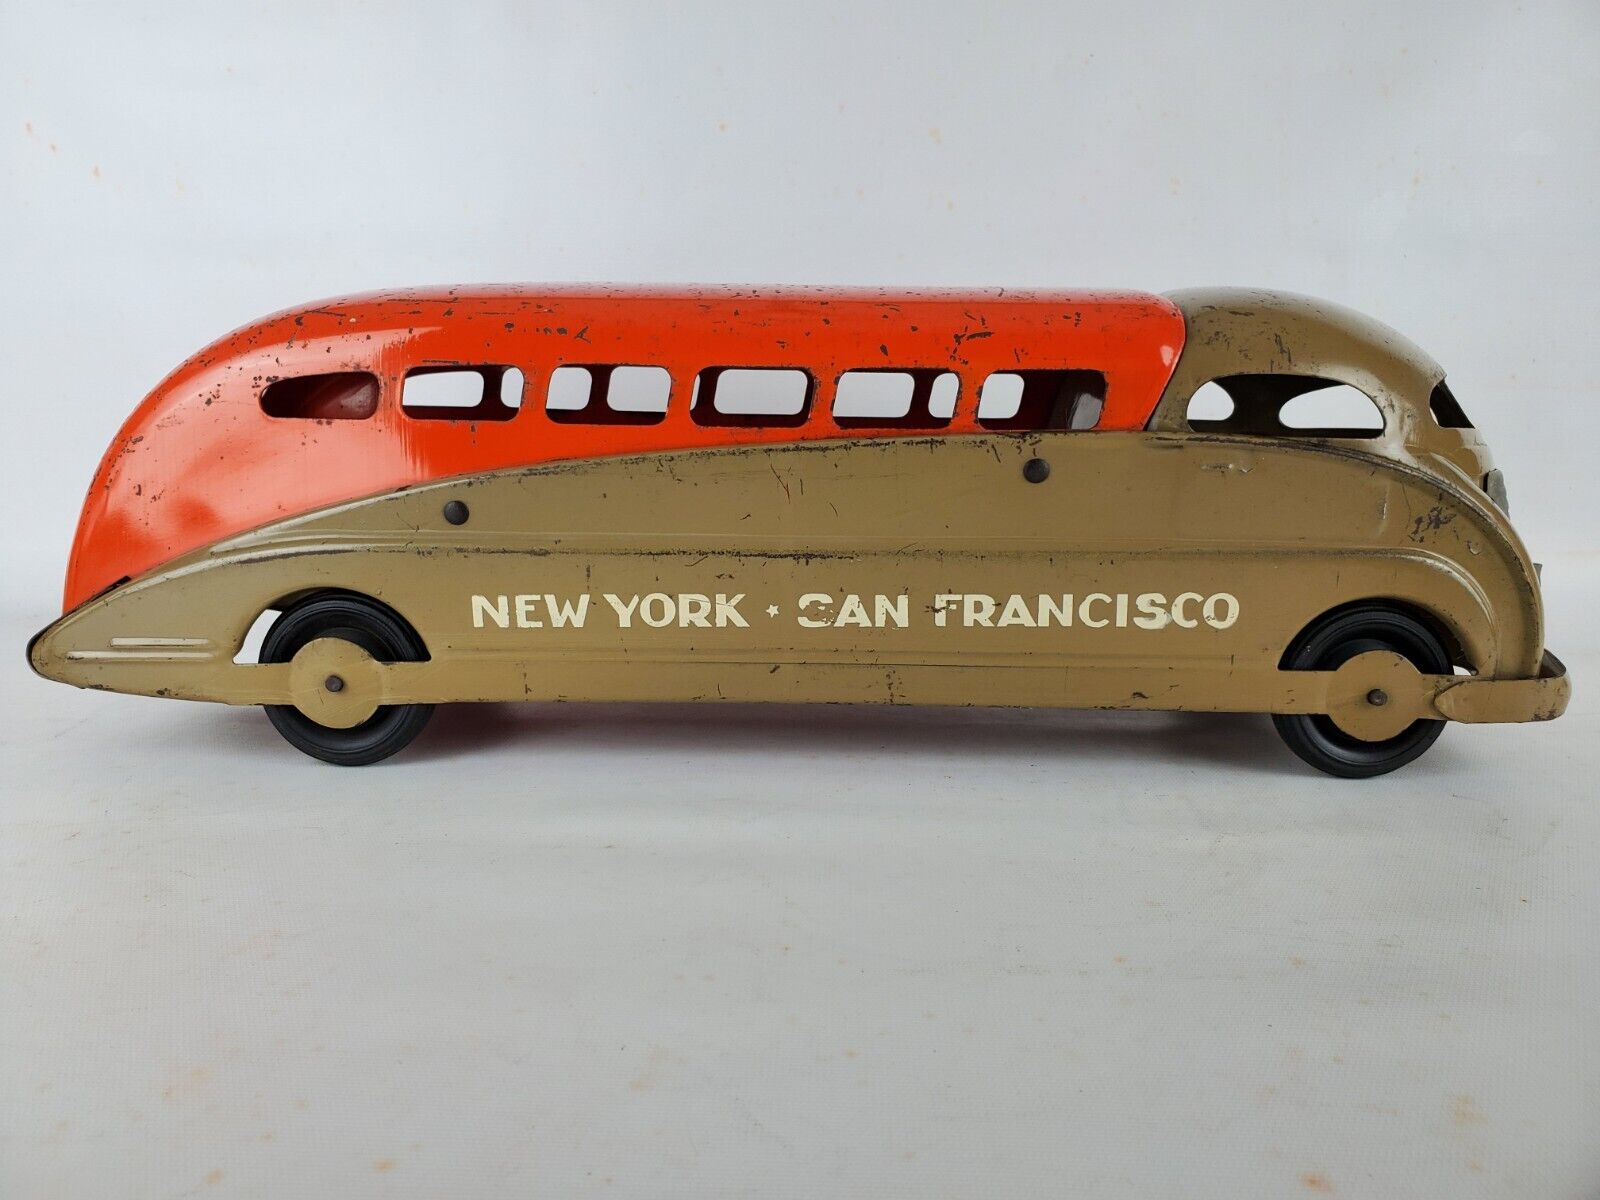 1941 Viktor Schreckengost New York to San Francisco deco Bus (not Buddy L)